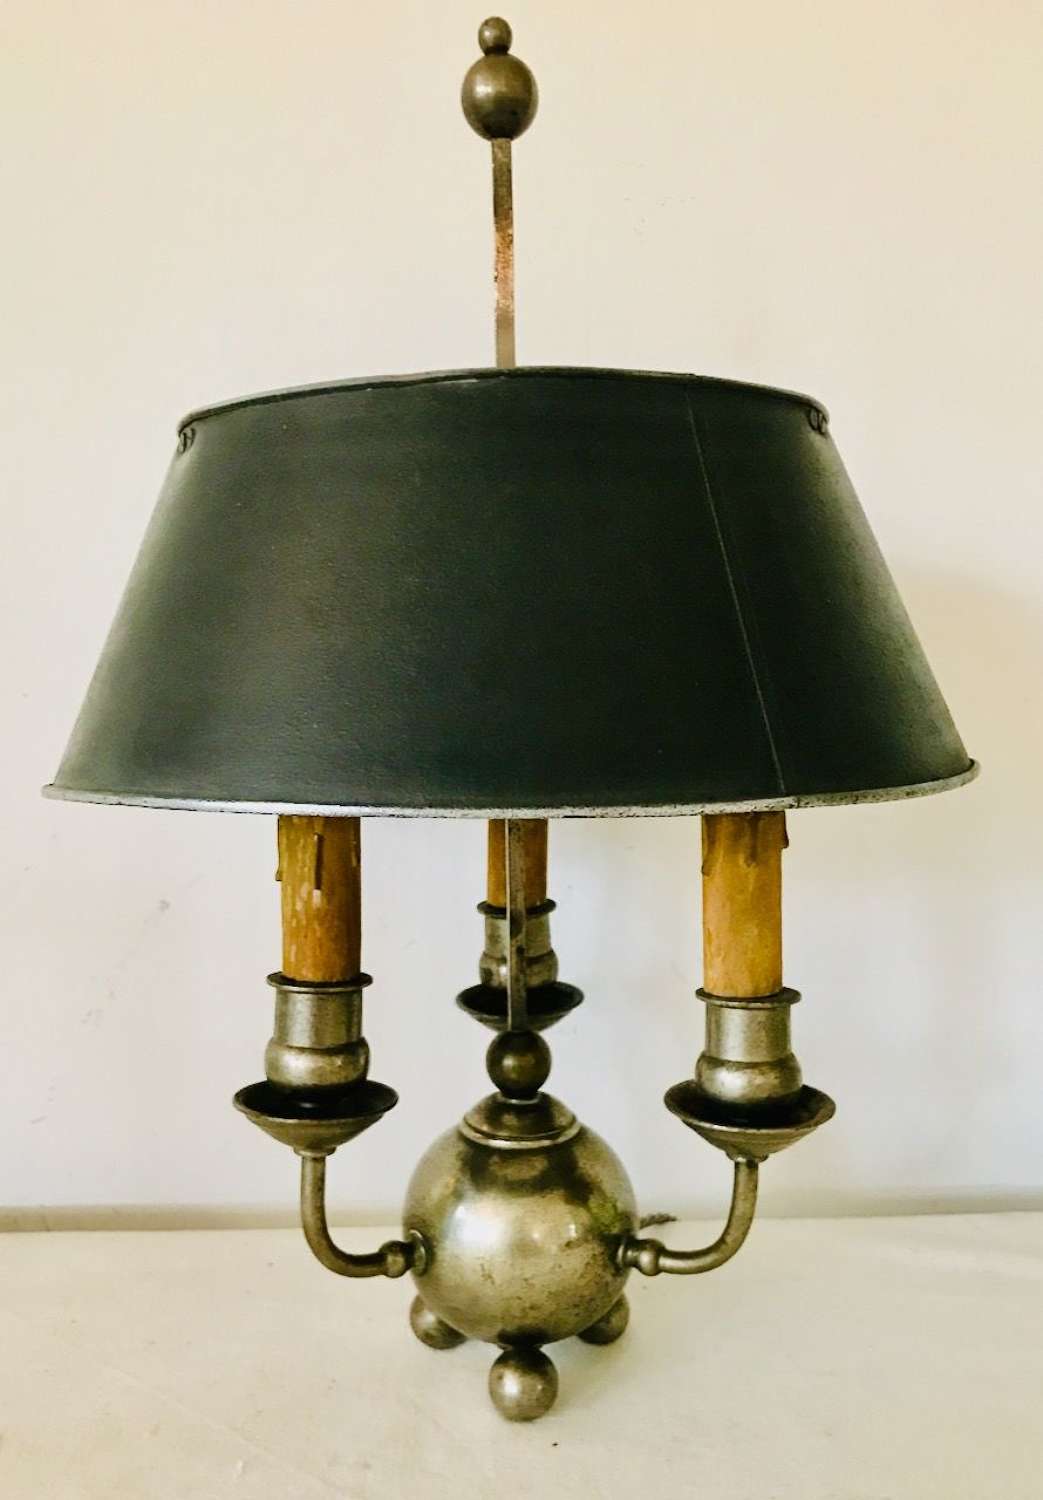 19th century student lamp